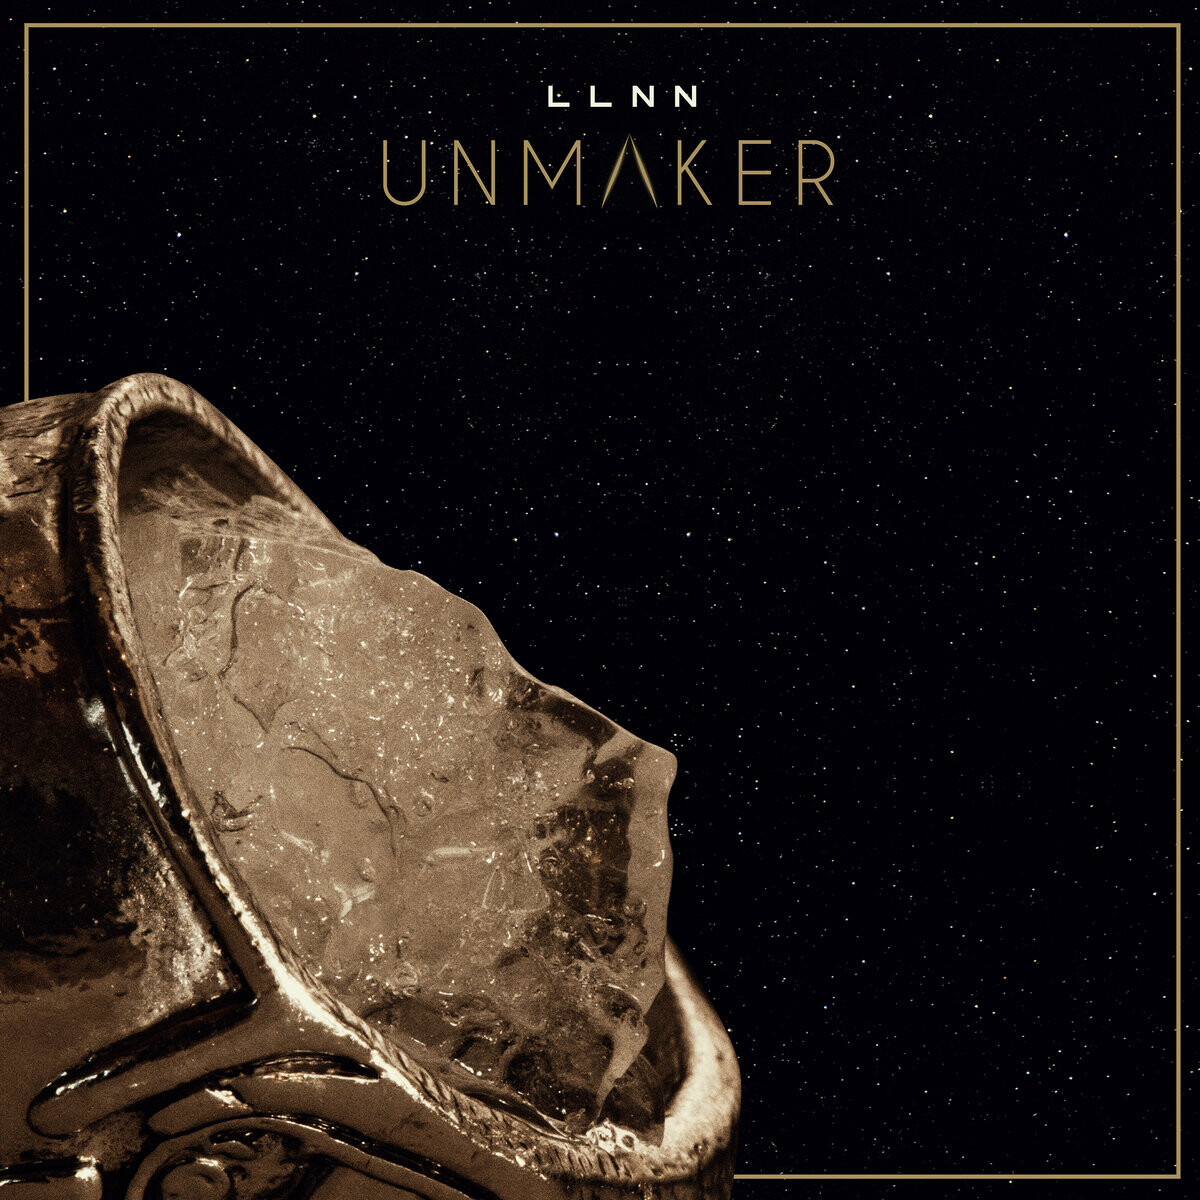 llnn--unmaker